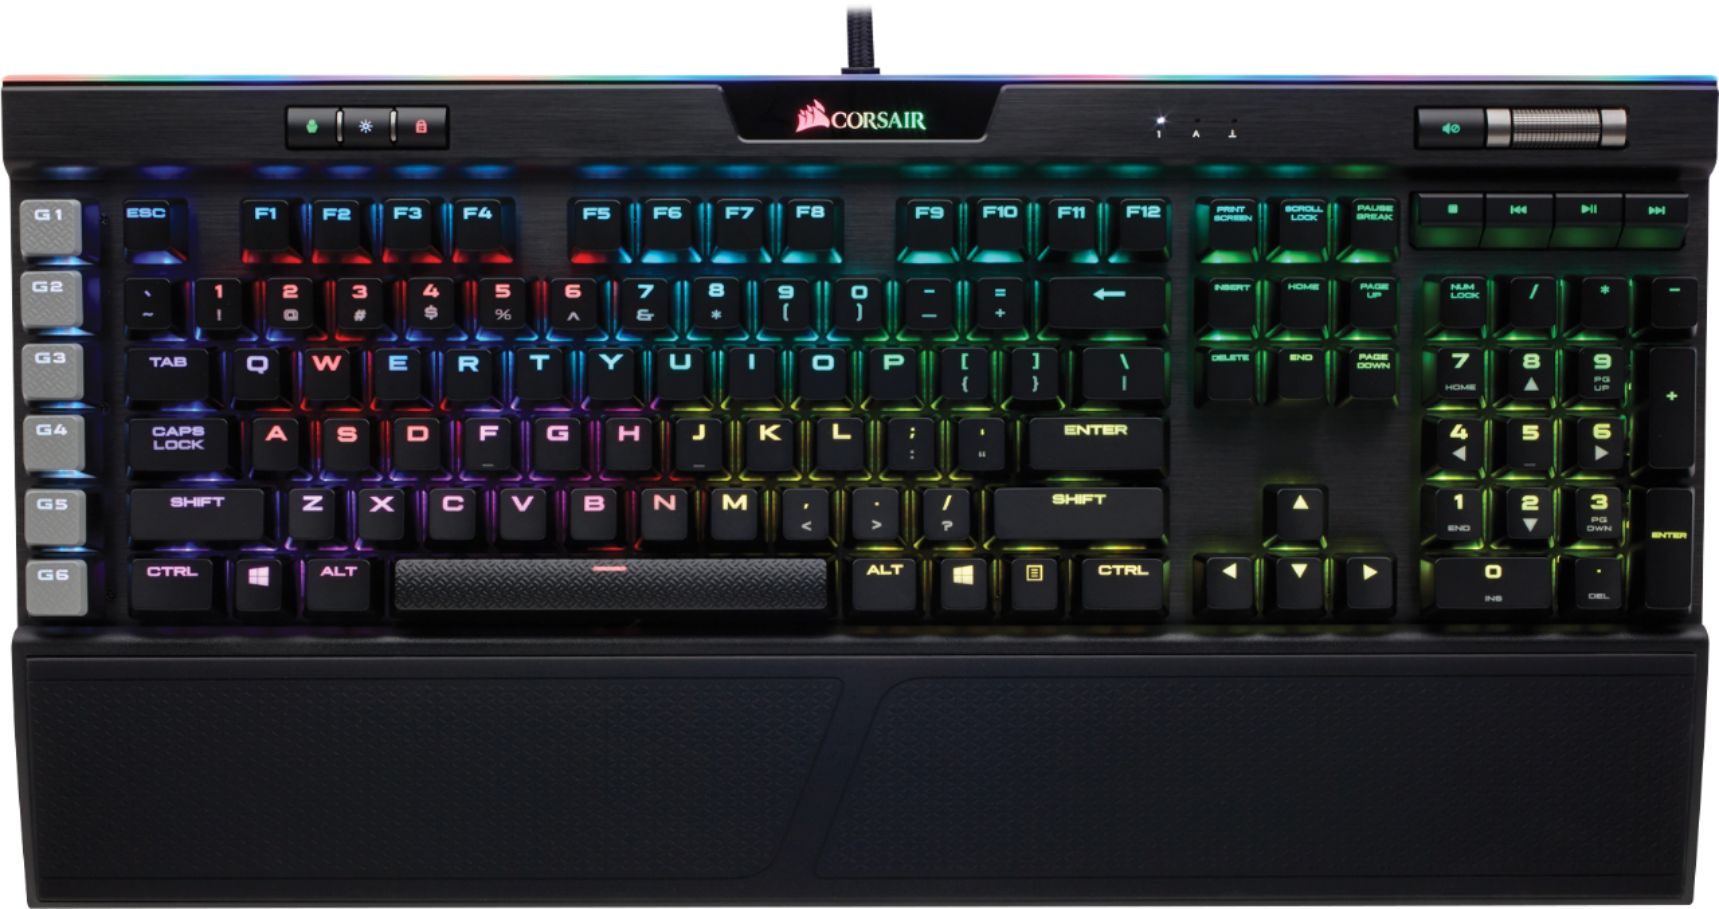 CORSAIR PLATINUM K95 Wired Gaming Mechanical Cherry MX Brown Switch Keyboard RGB Backlighting Black CH-9127012-NA - Best